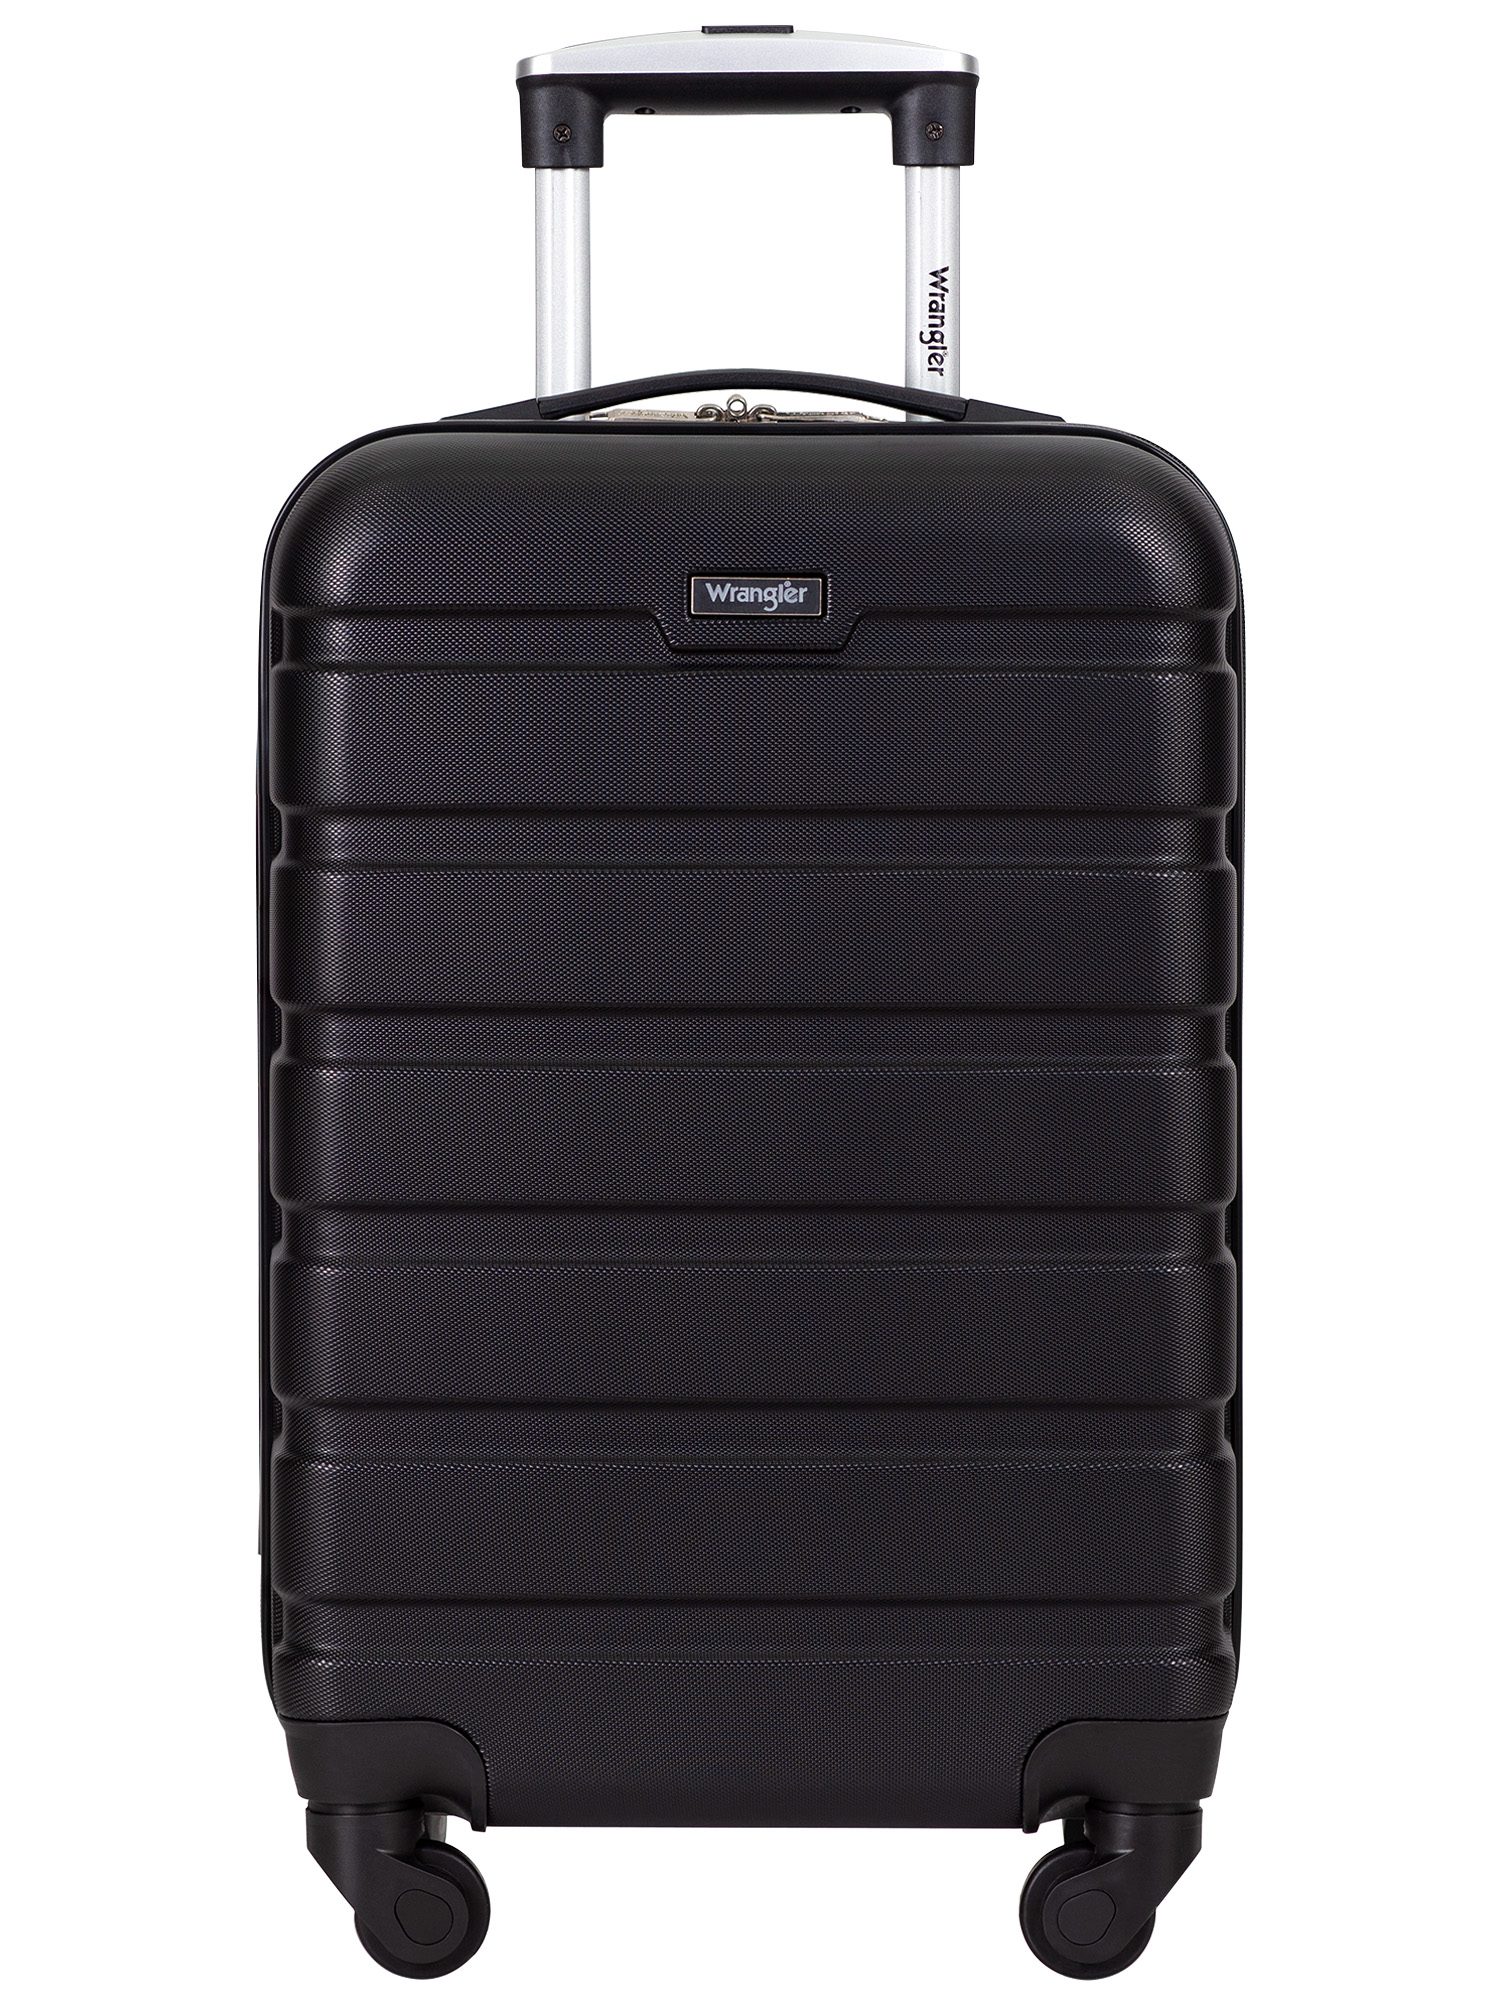 Wrangler 20” Carry-on Rolling Hardside Spinner Luggage Black - image 3 of 8